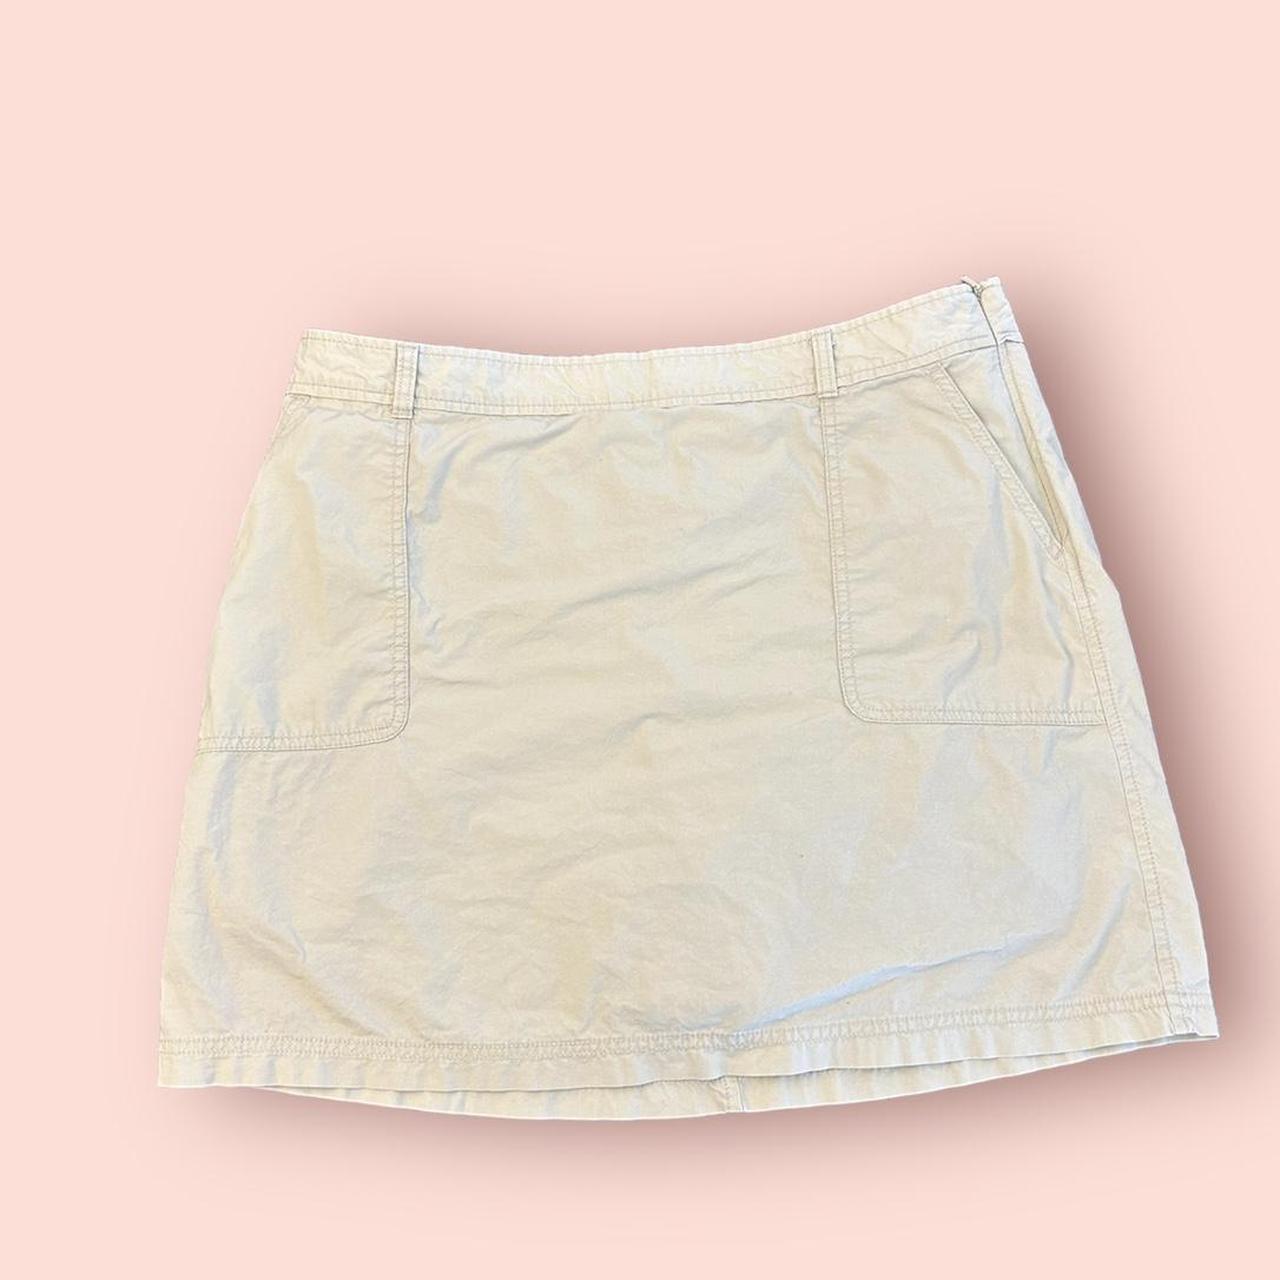 khaki mini skirt🌸 super cute y2k mini skirt has... - Depop